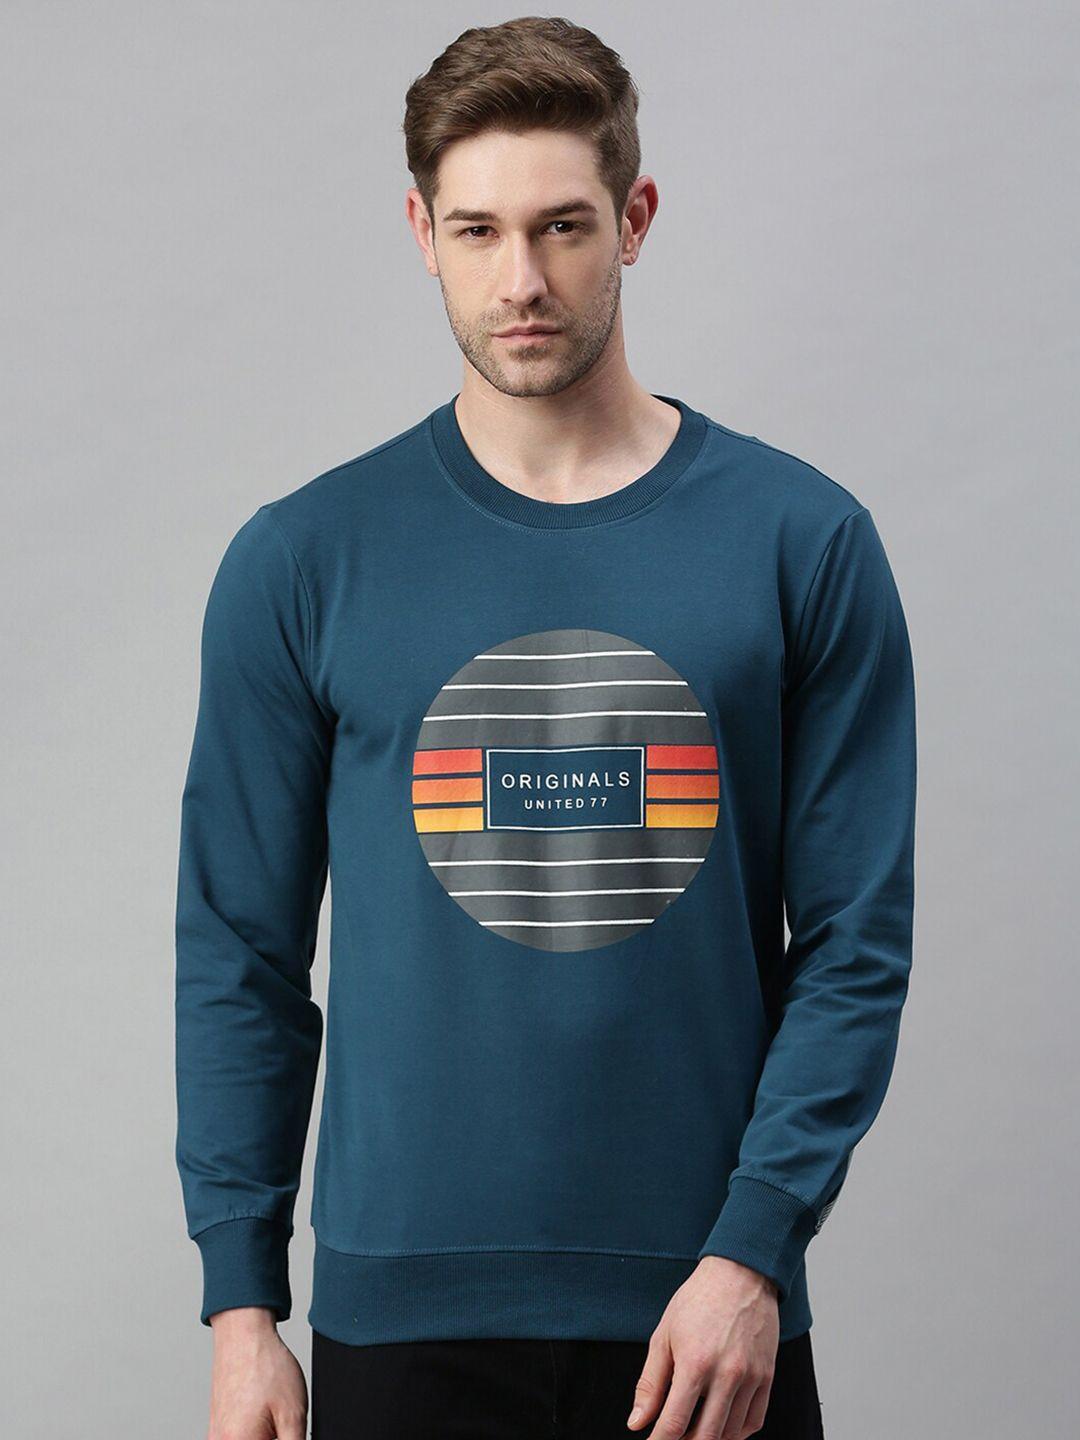 showoff-men-teal-blue-printed-cotton-sweatshirt